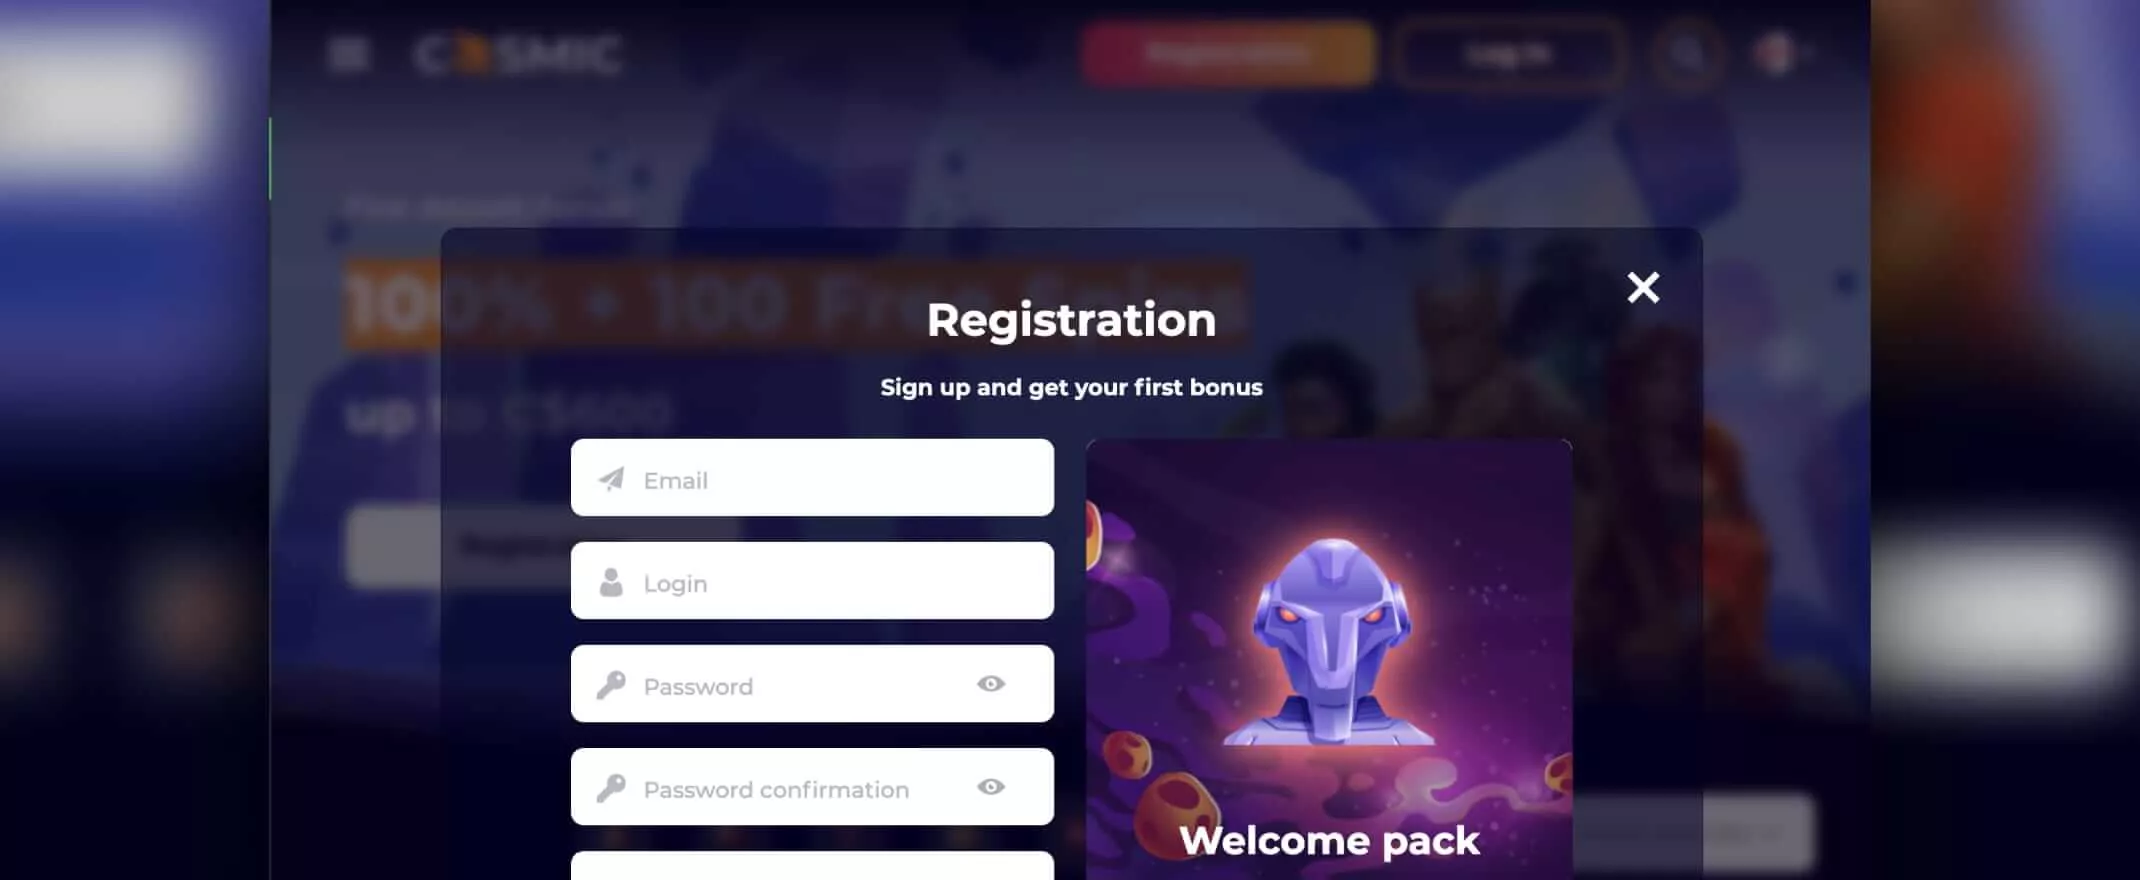 CosmicSlot Casino registration screenshot